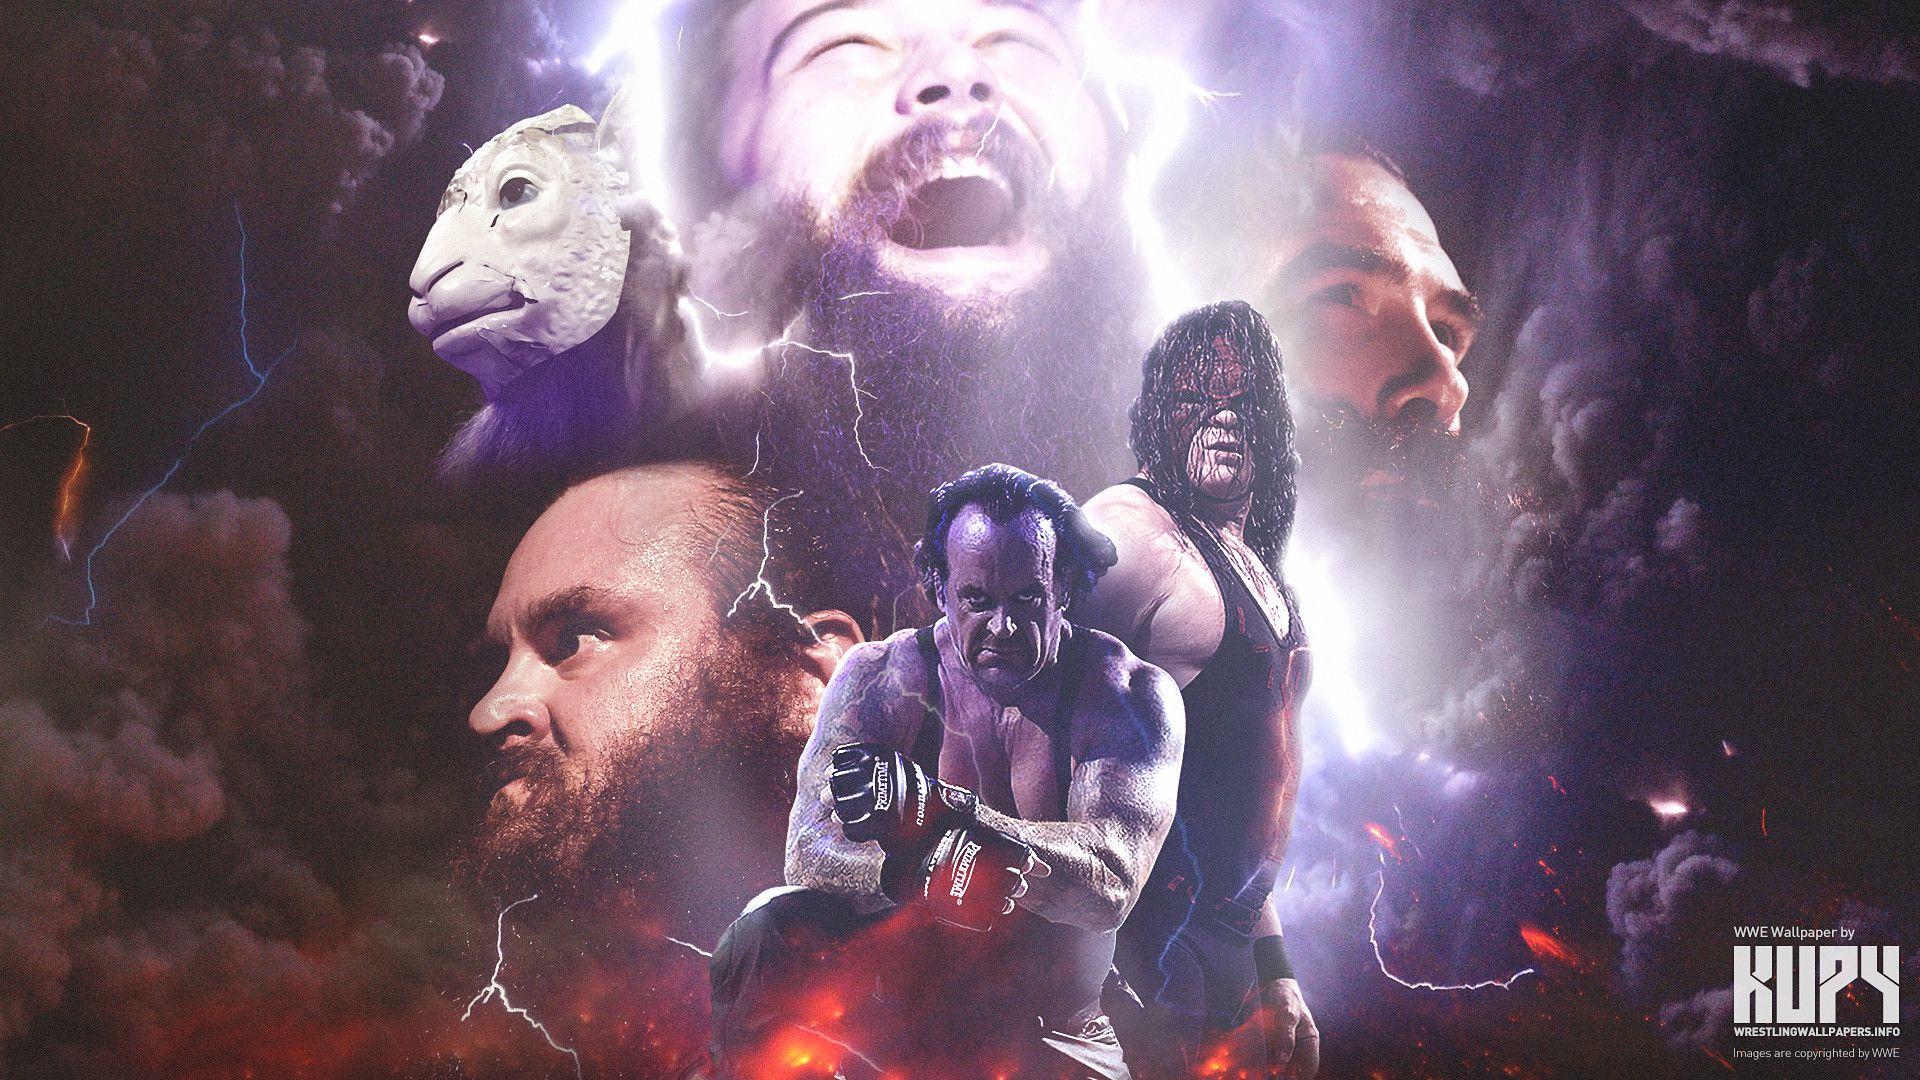 WWE Undertaker Wallpaper  a cool Wallpaper of the Undertake  Flickr